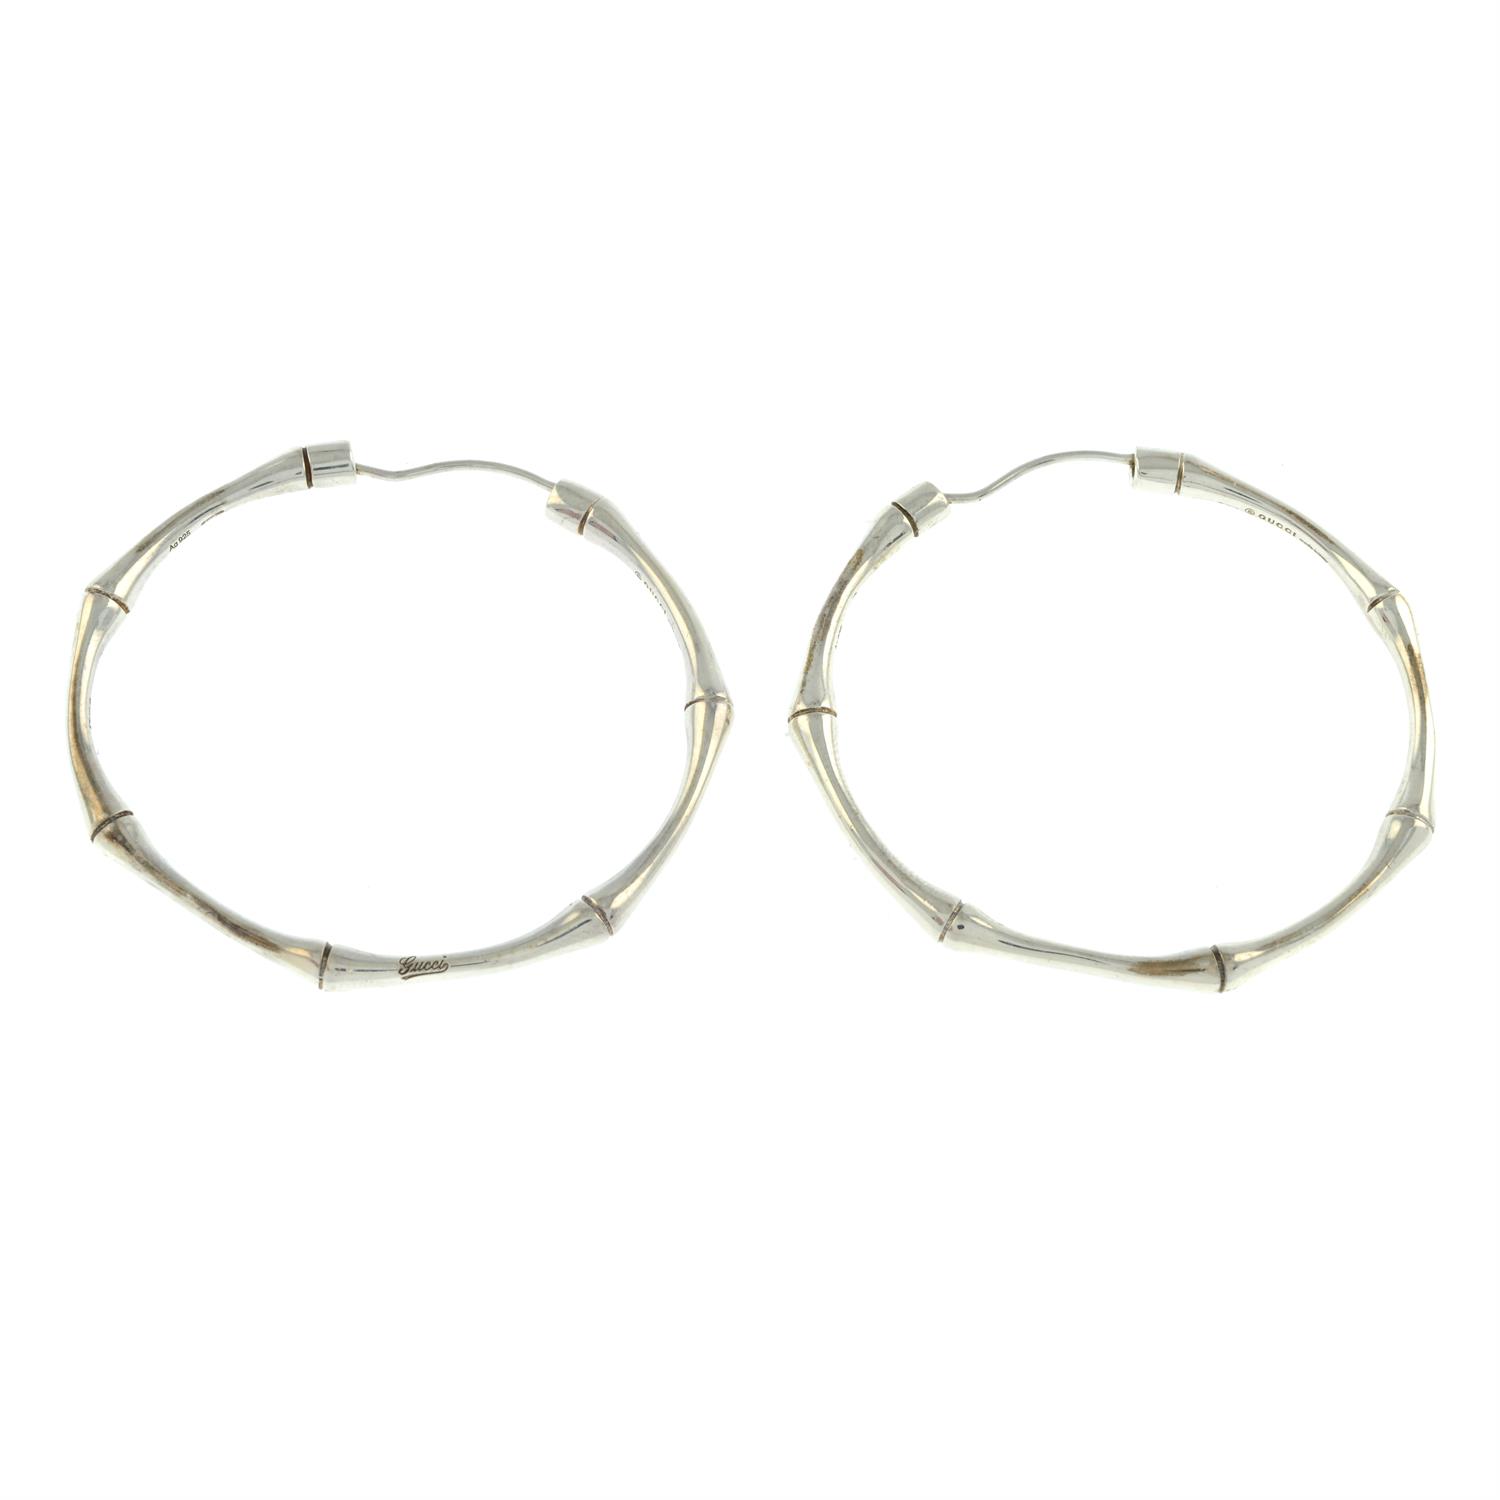 Gucci - silver Bamboo hoop earrings. - Image 2 of 3